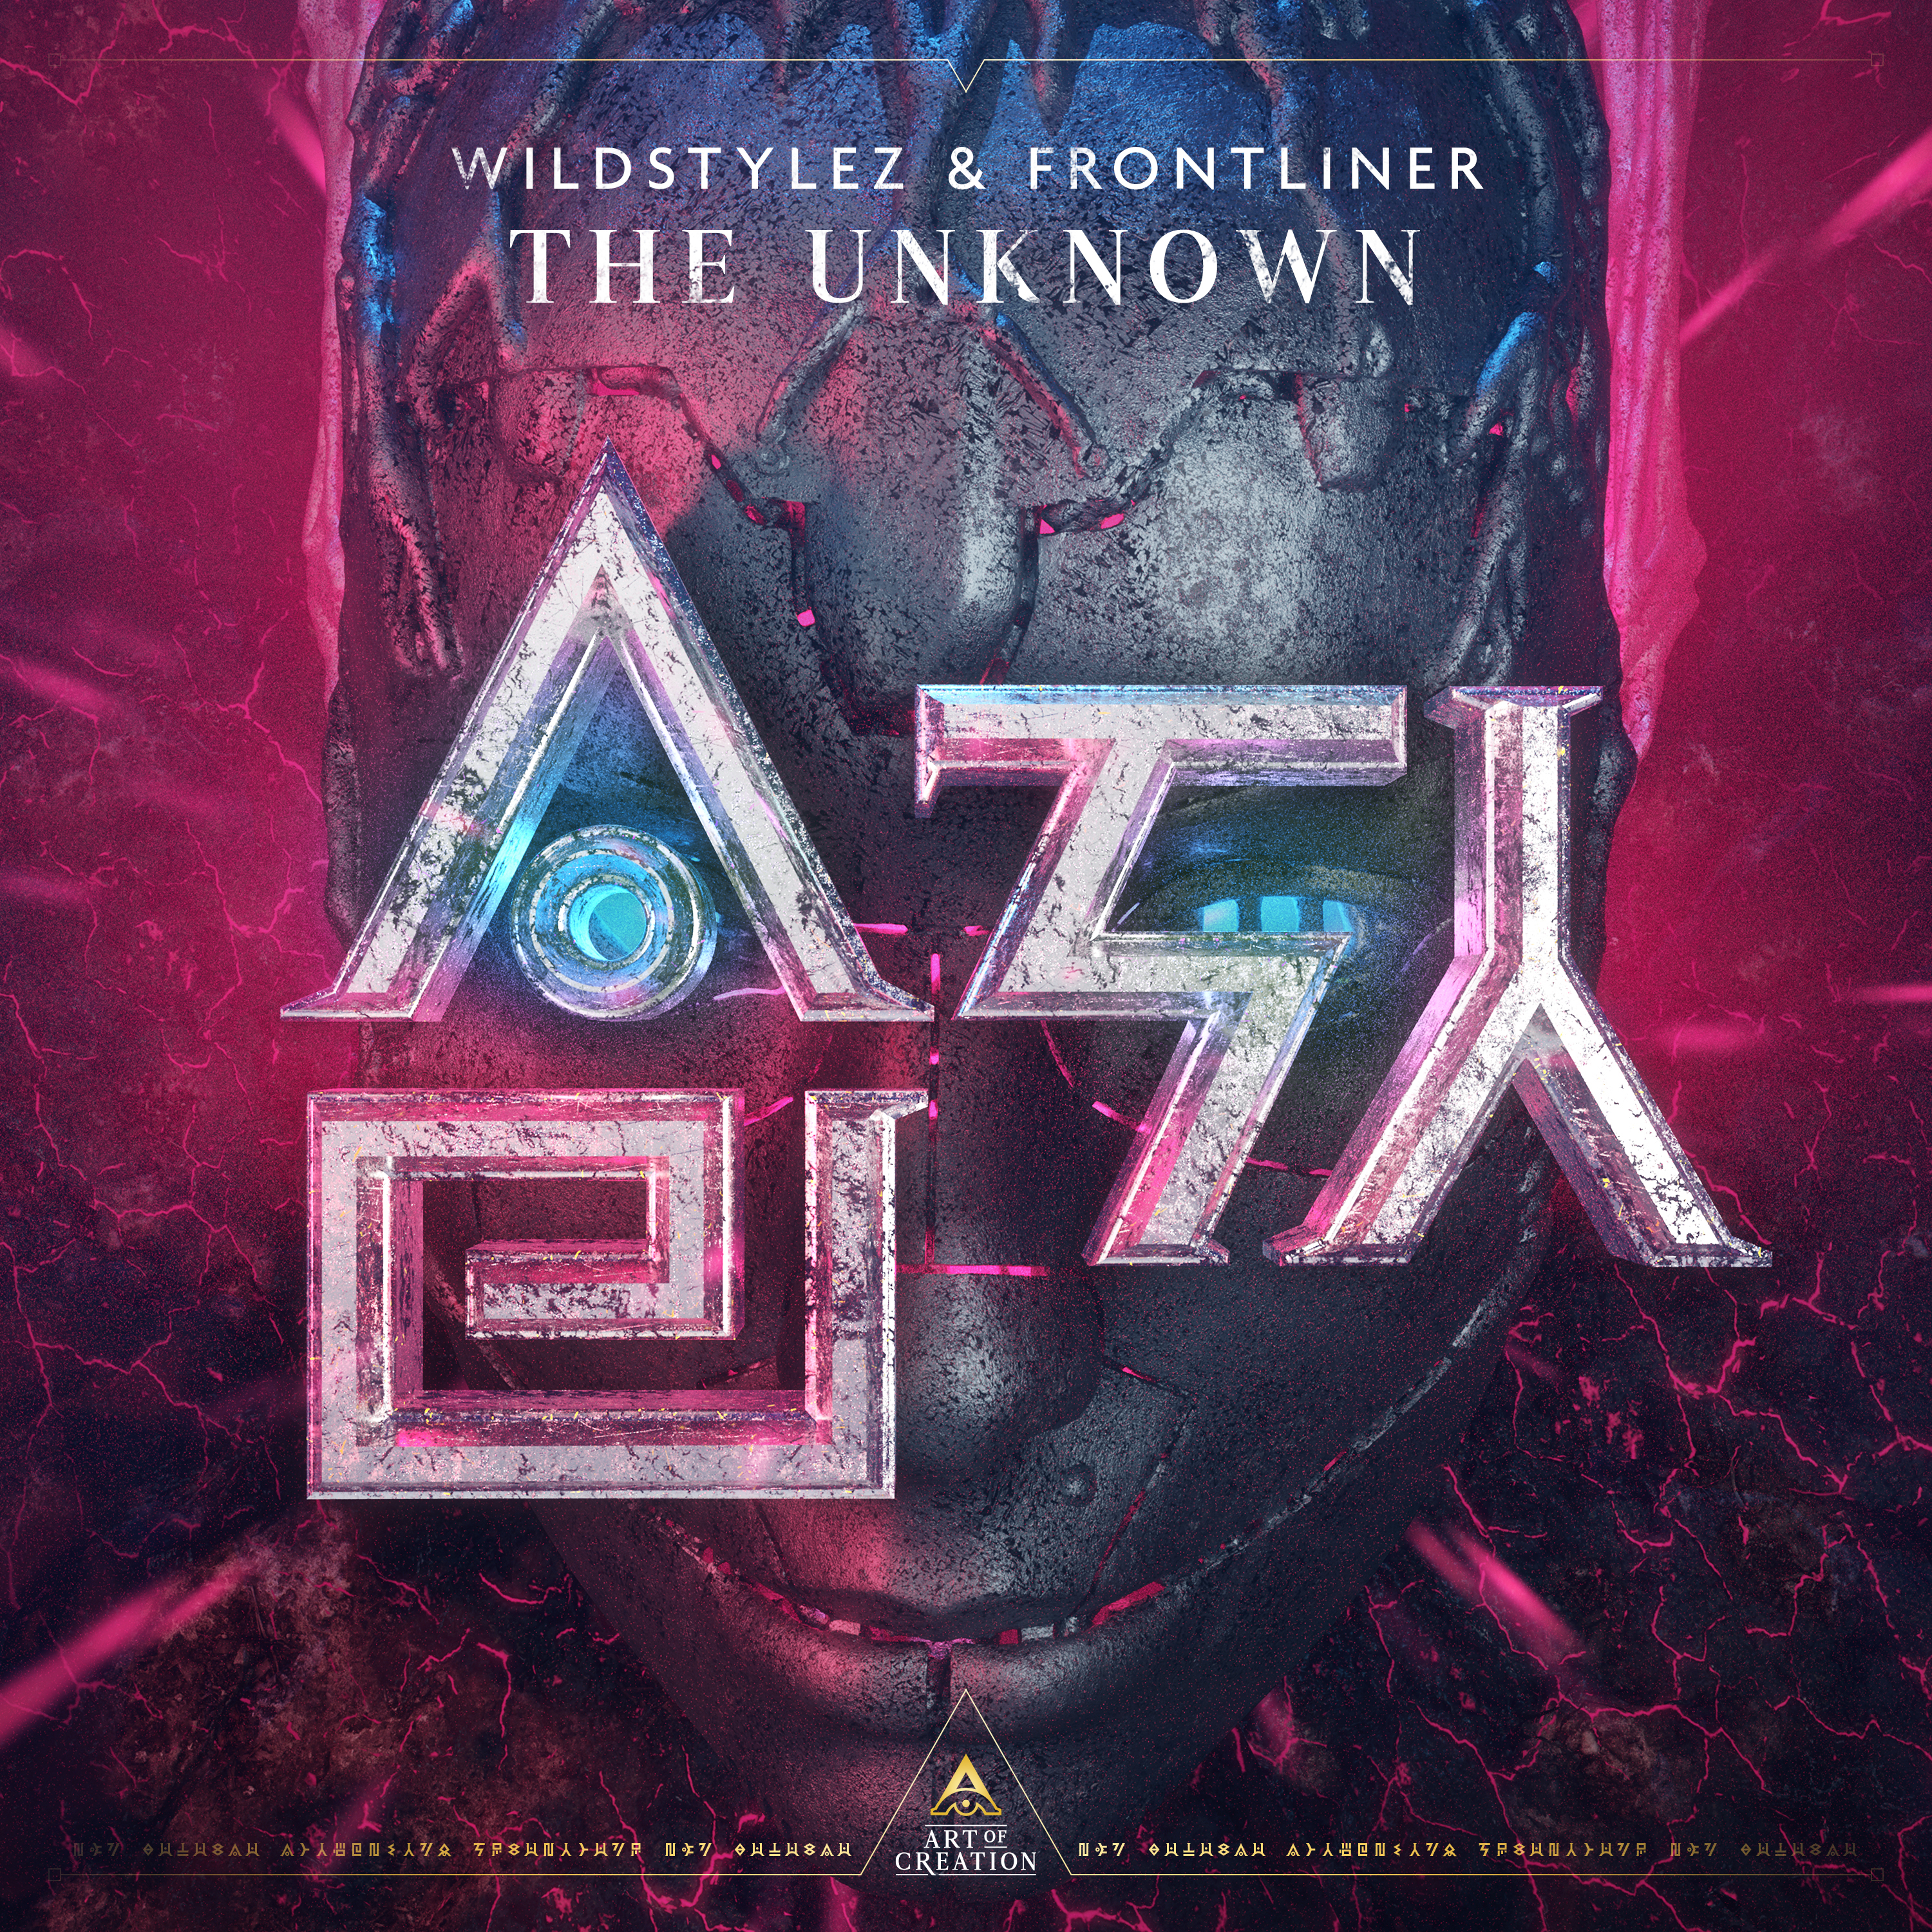 Wildstylez & Frontliner — The Unknown cover artwork